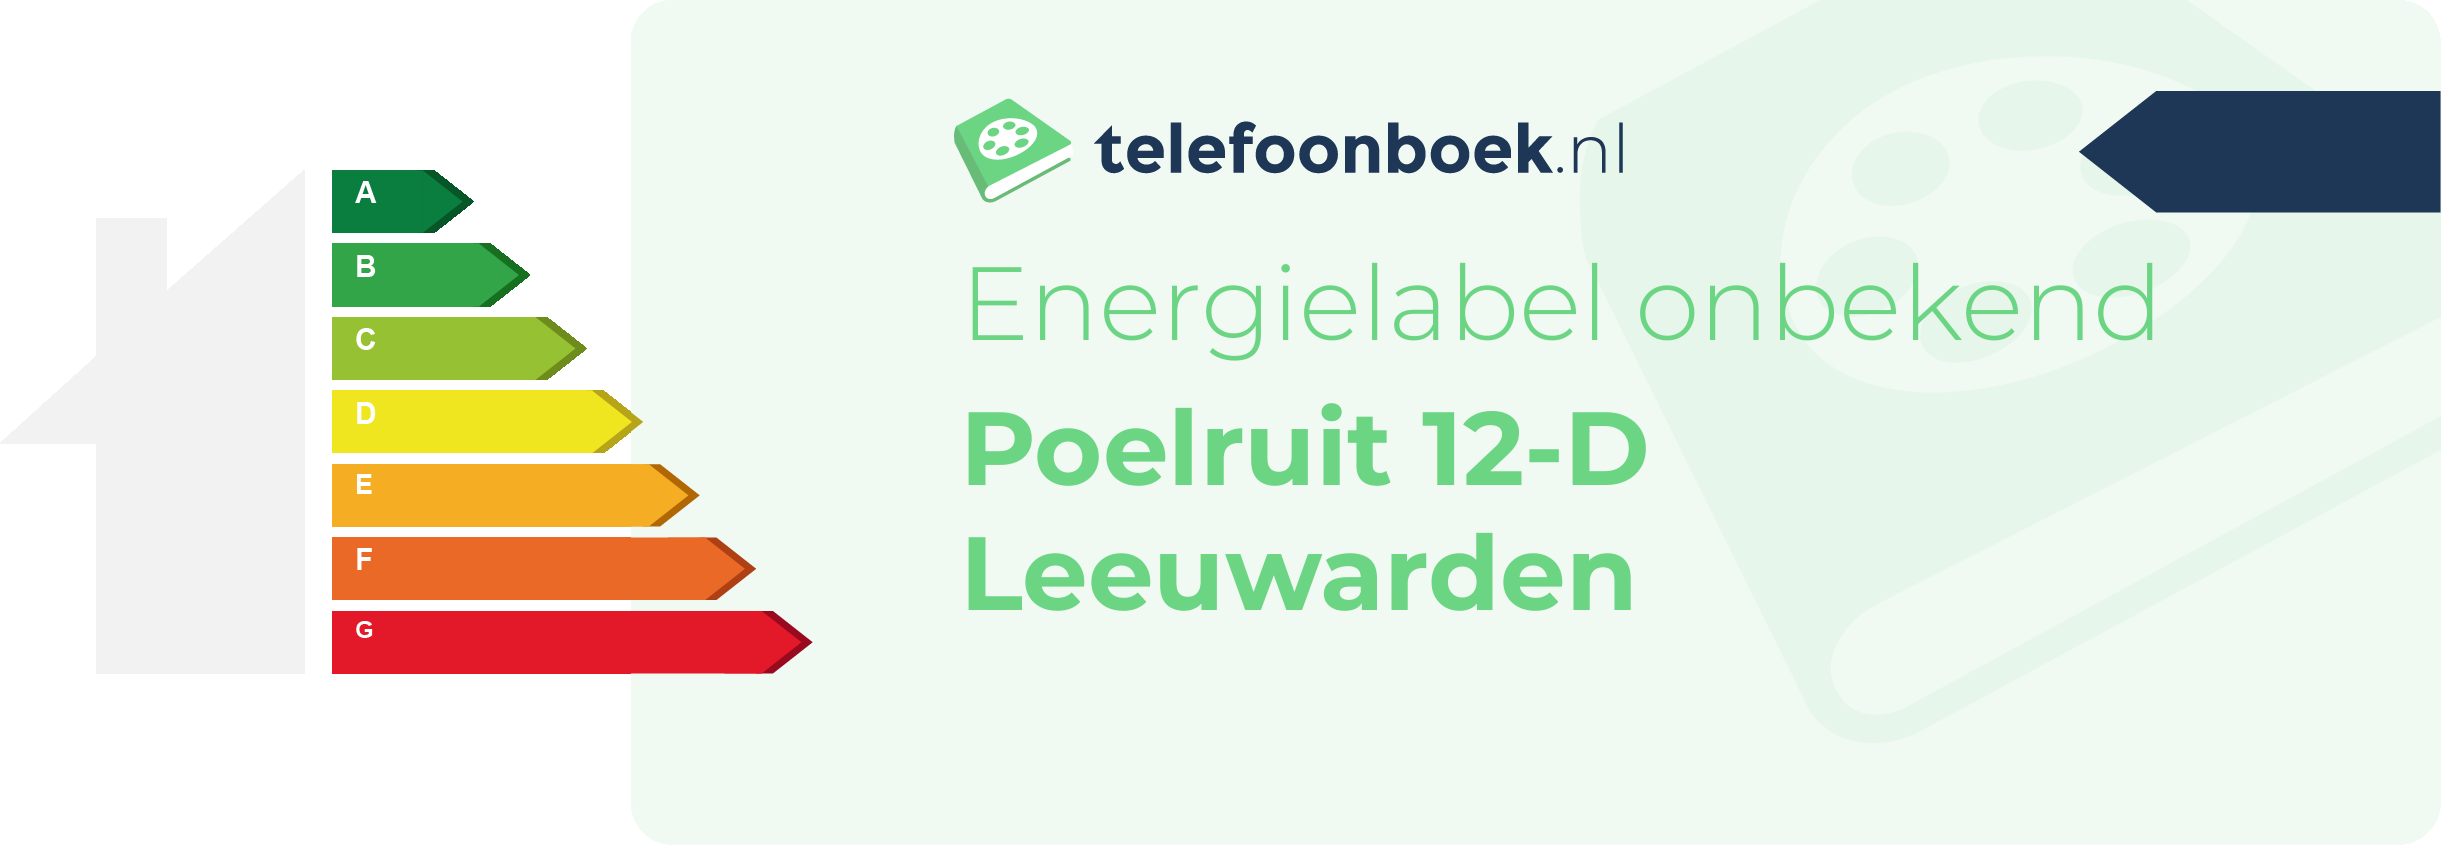 Energielabel Poelruit 12-D Leeuwarden